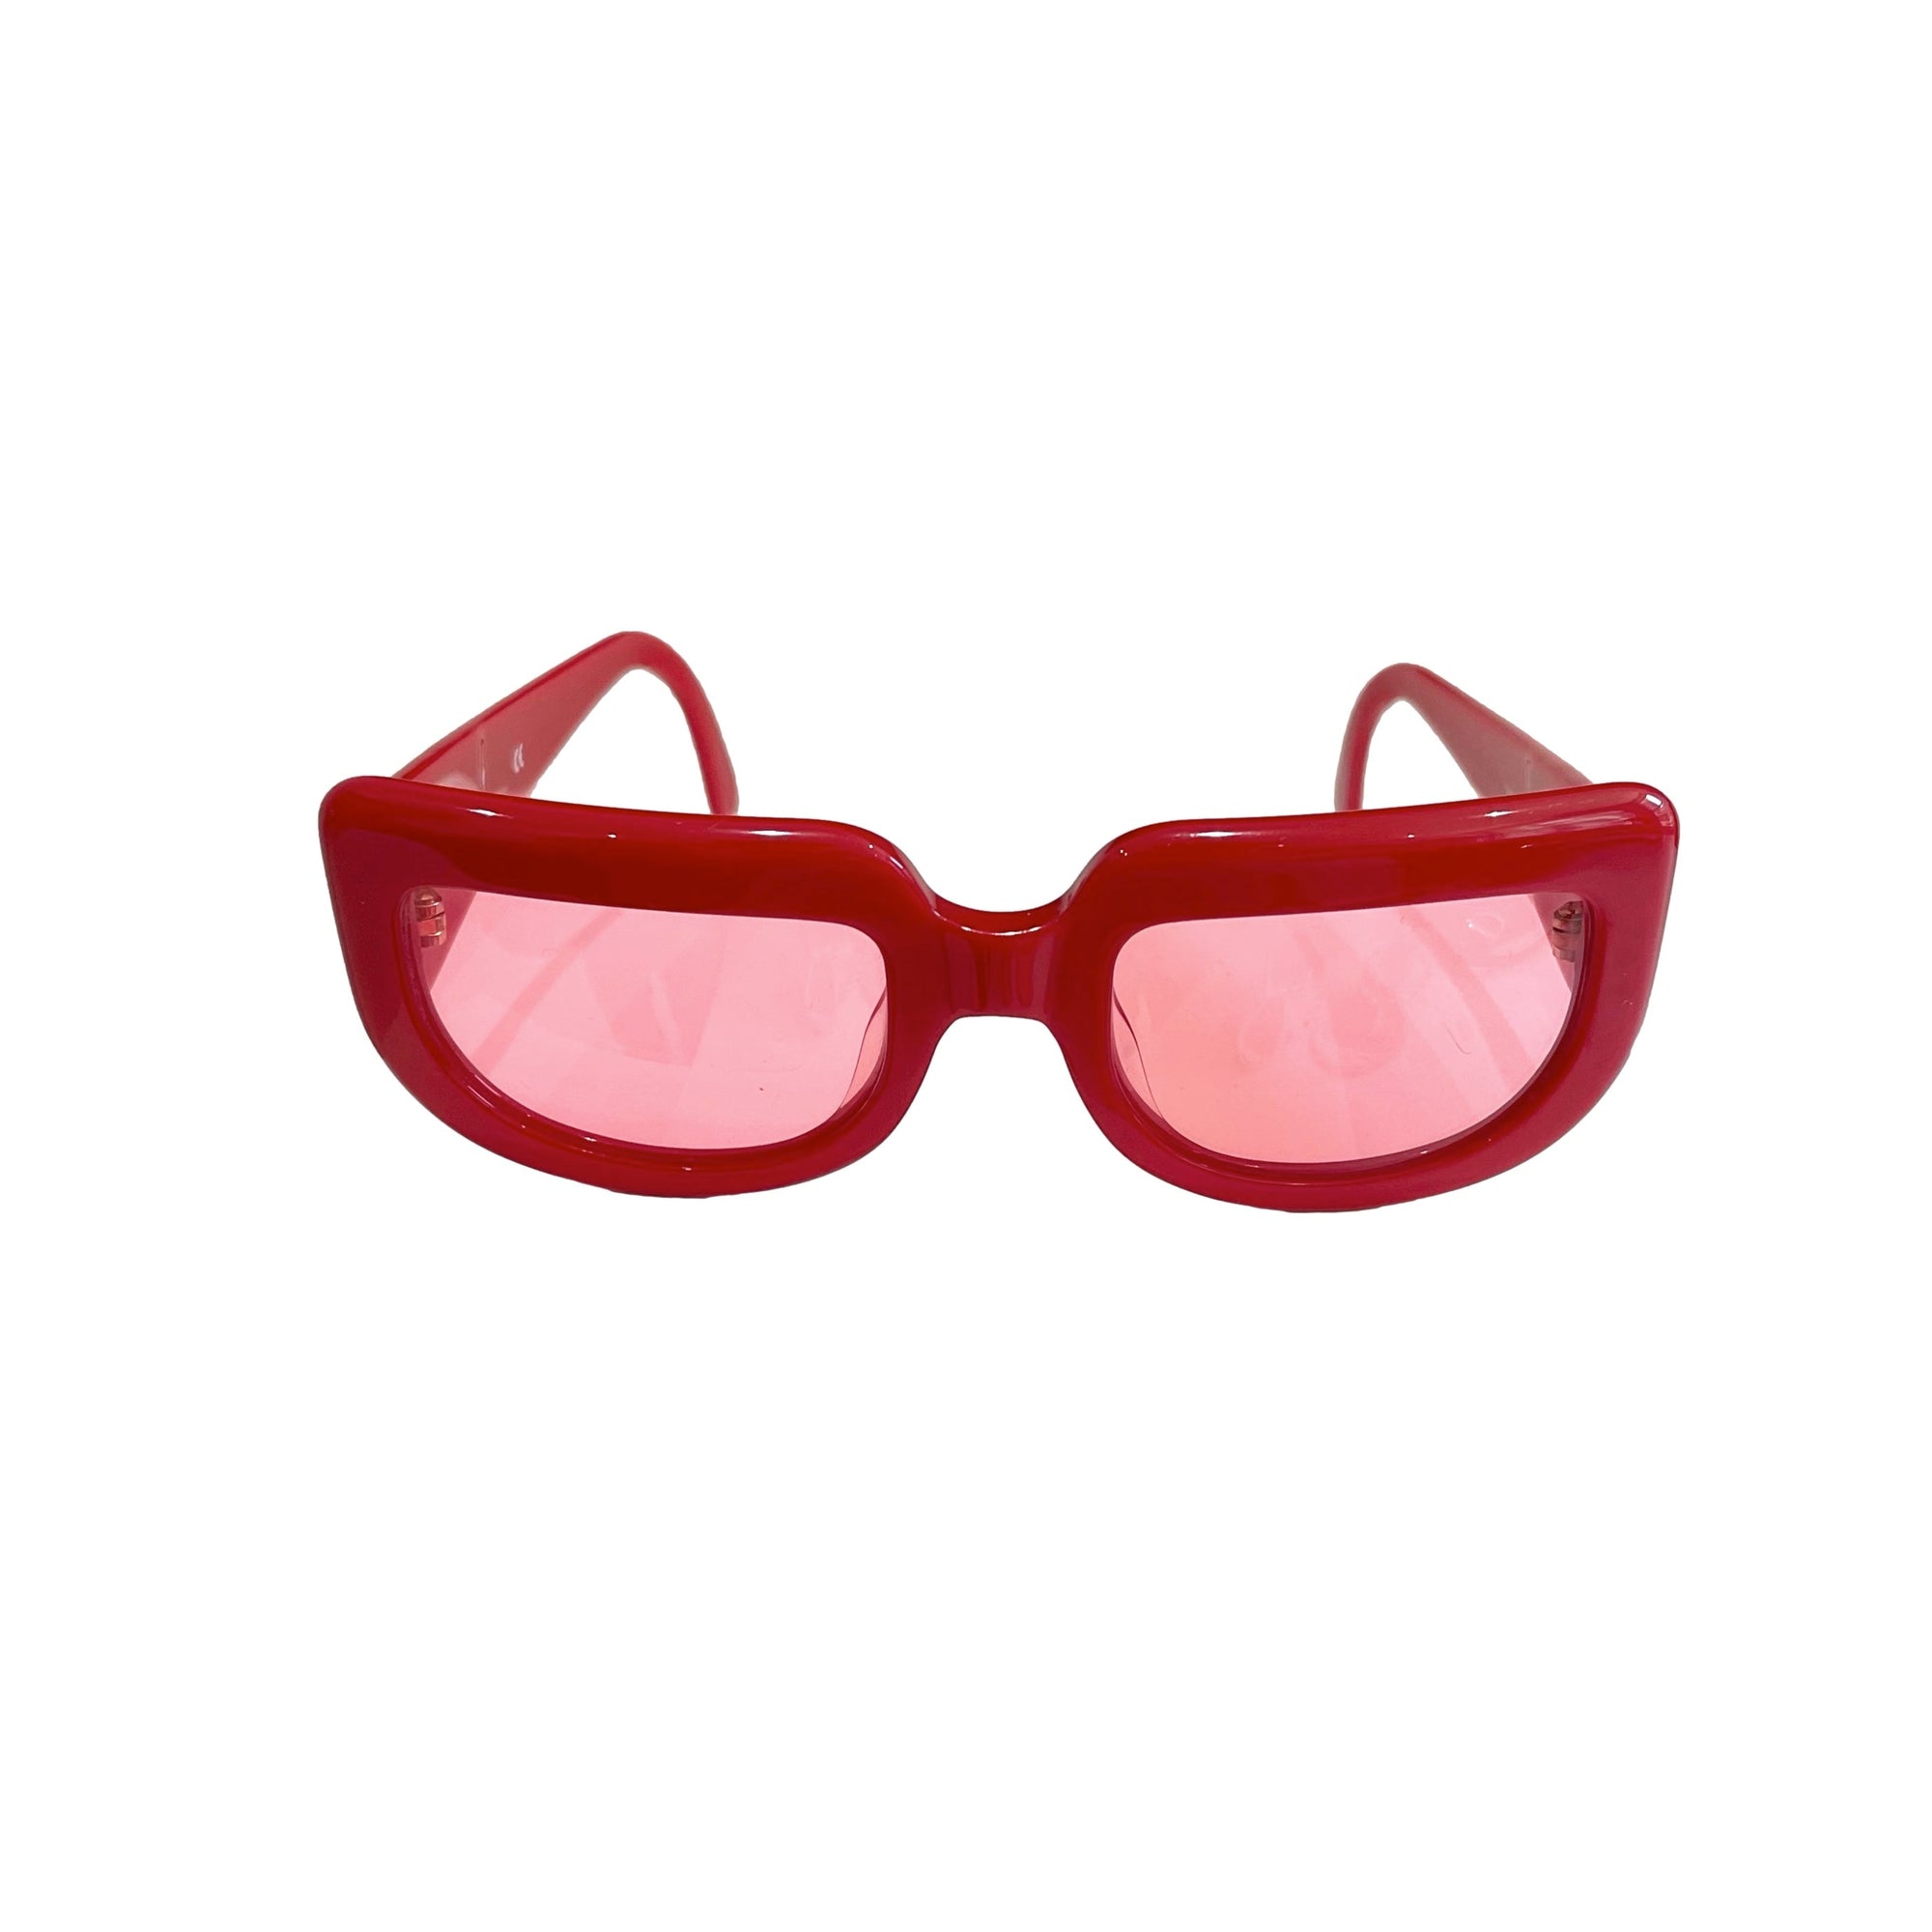 Chanel Red Jumbo Logo Sunglasses - Sunglasses